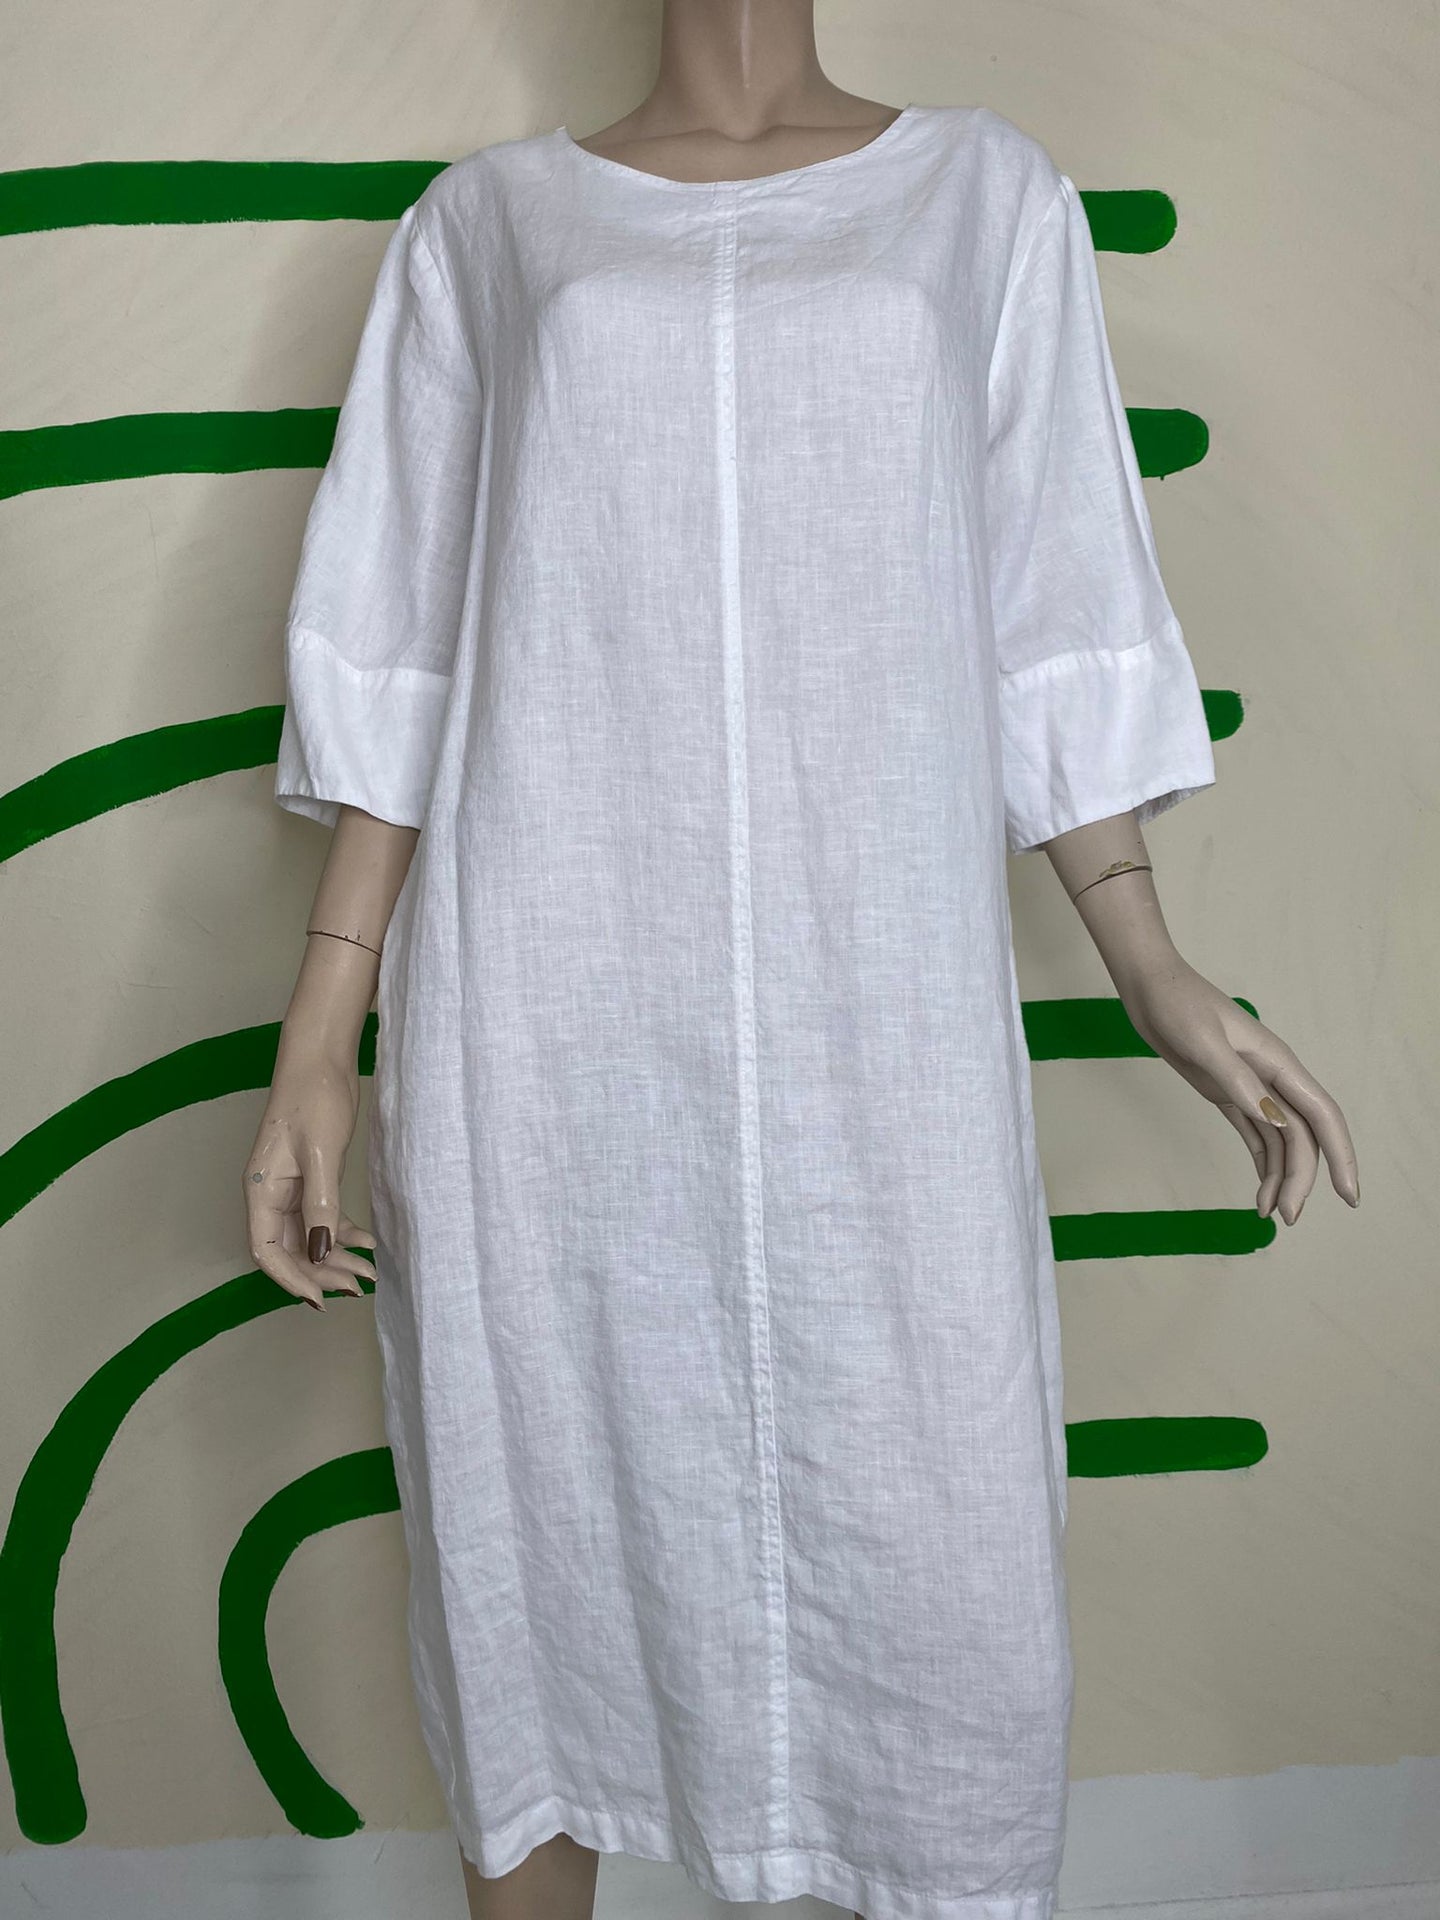 White Curve Dress